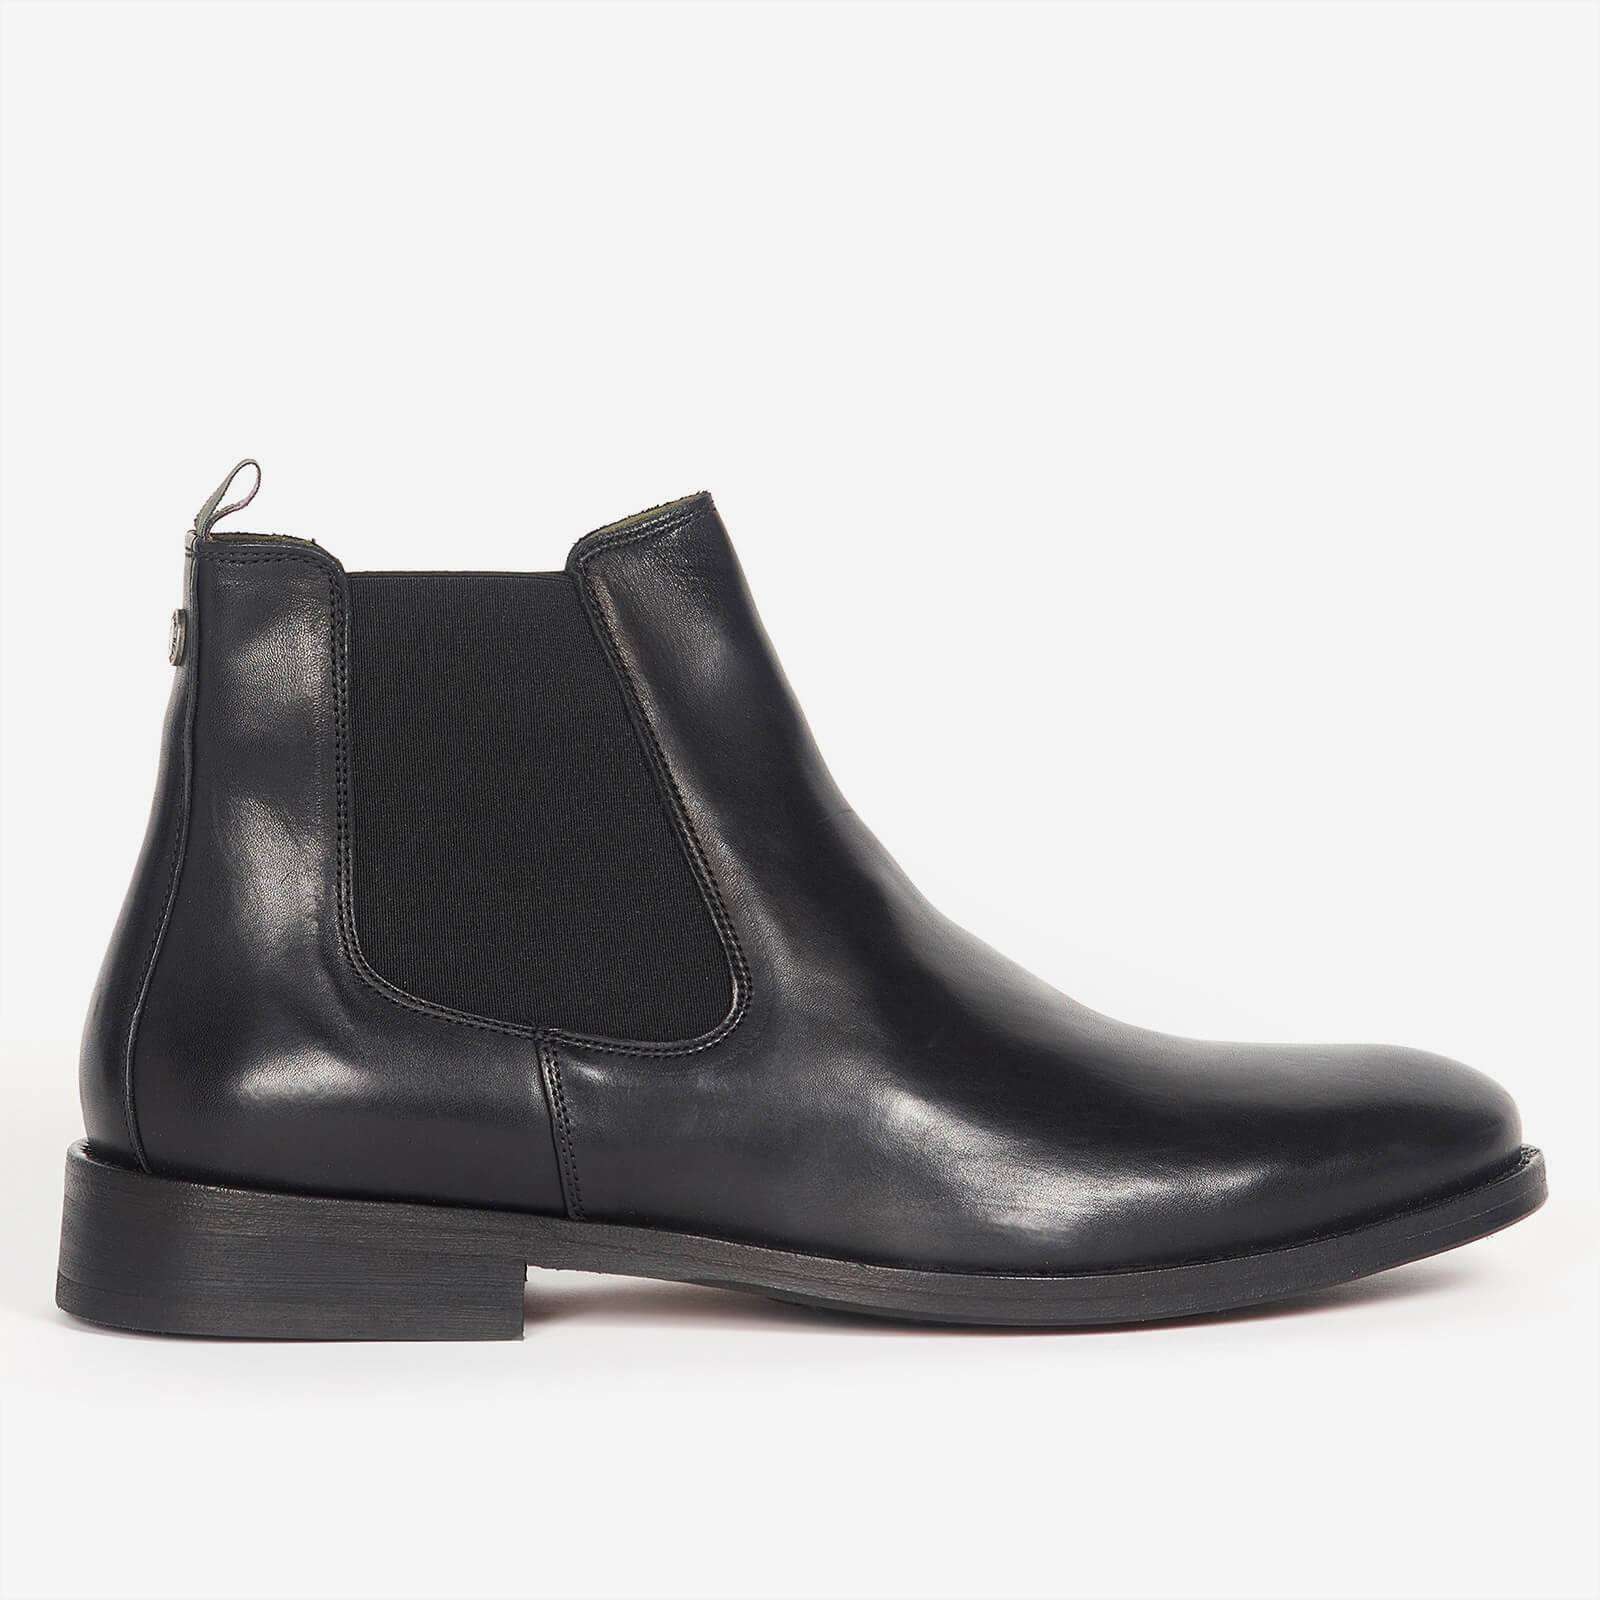 Barbour Men's Bedlington Leather Chelsea Boots - Black - UK 7